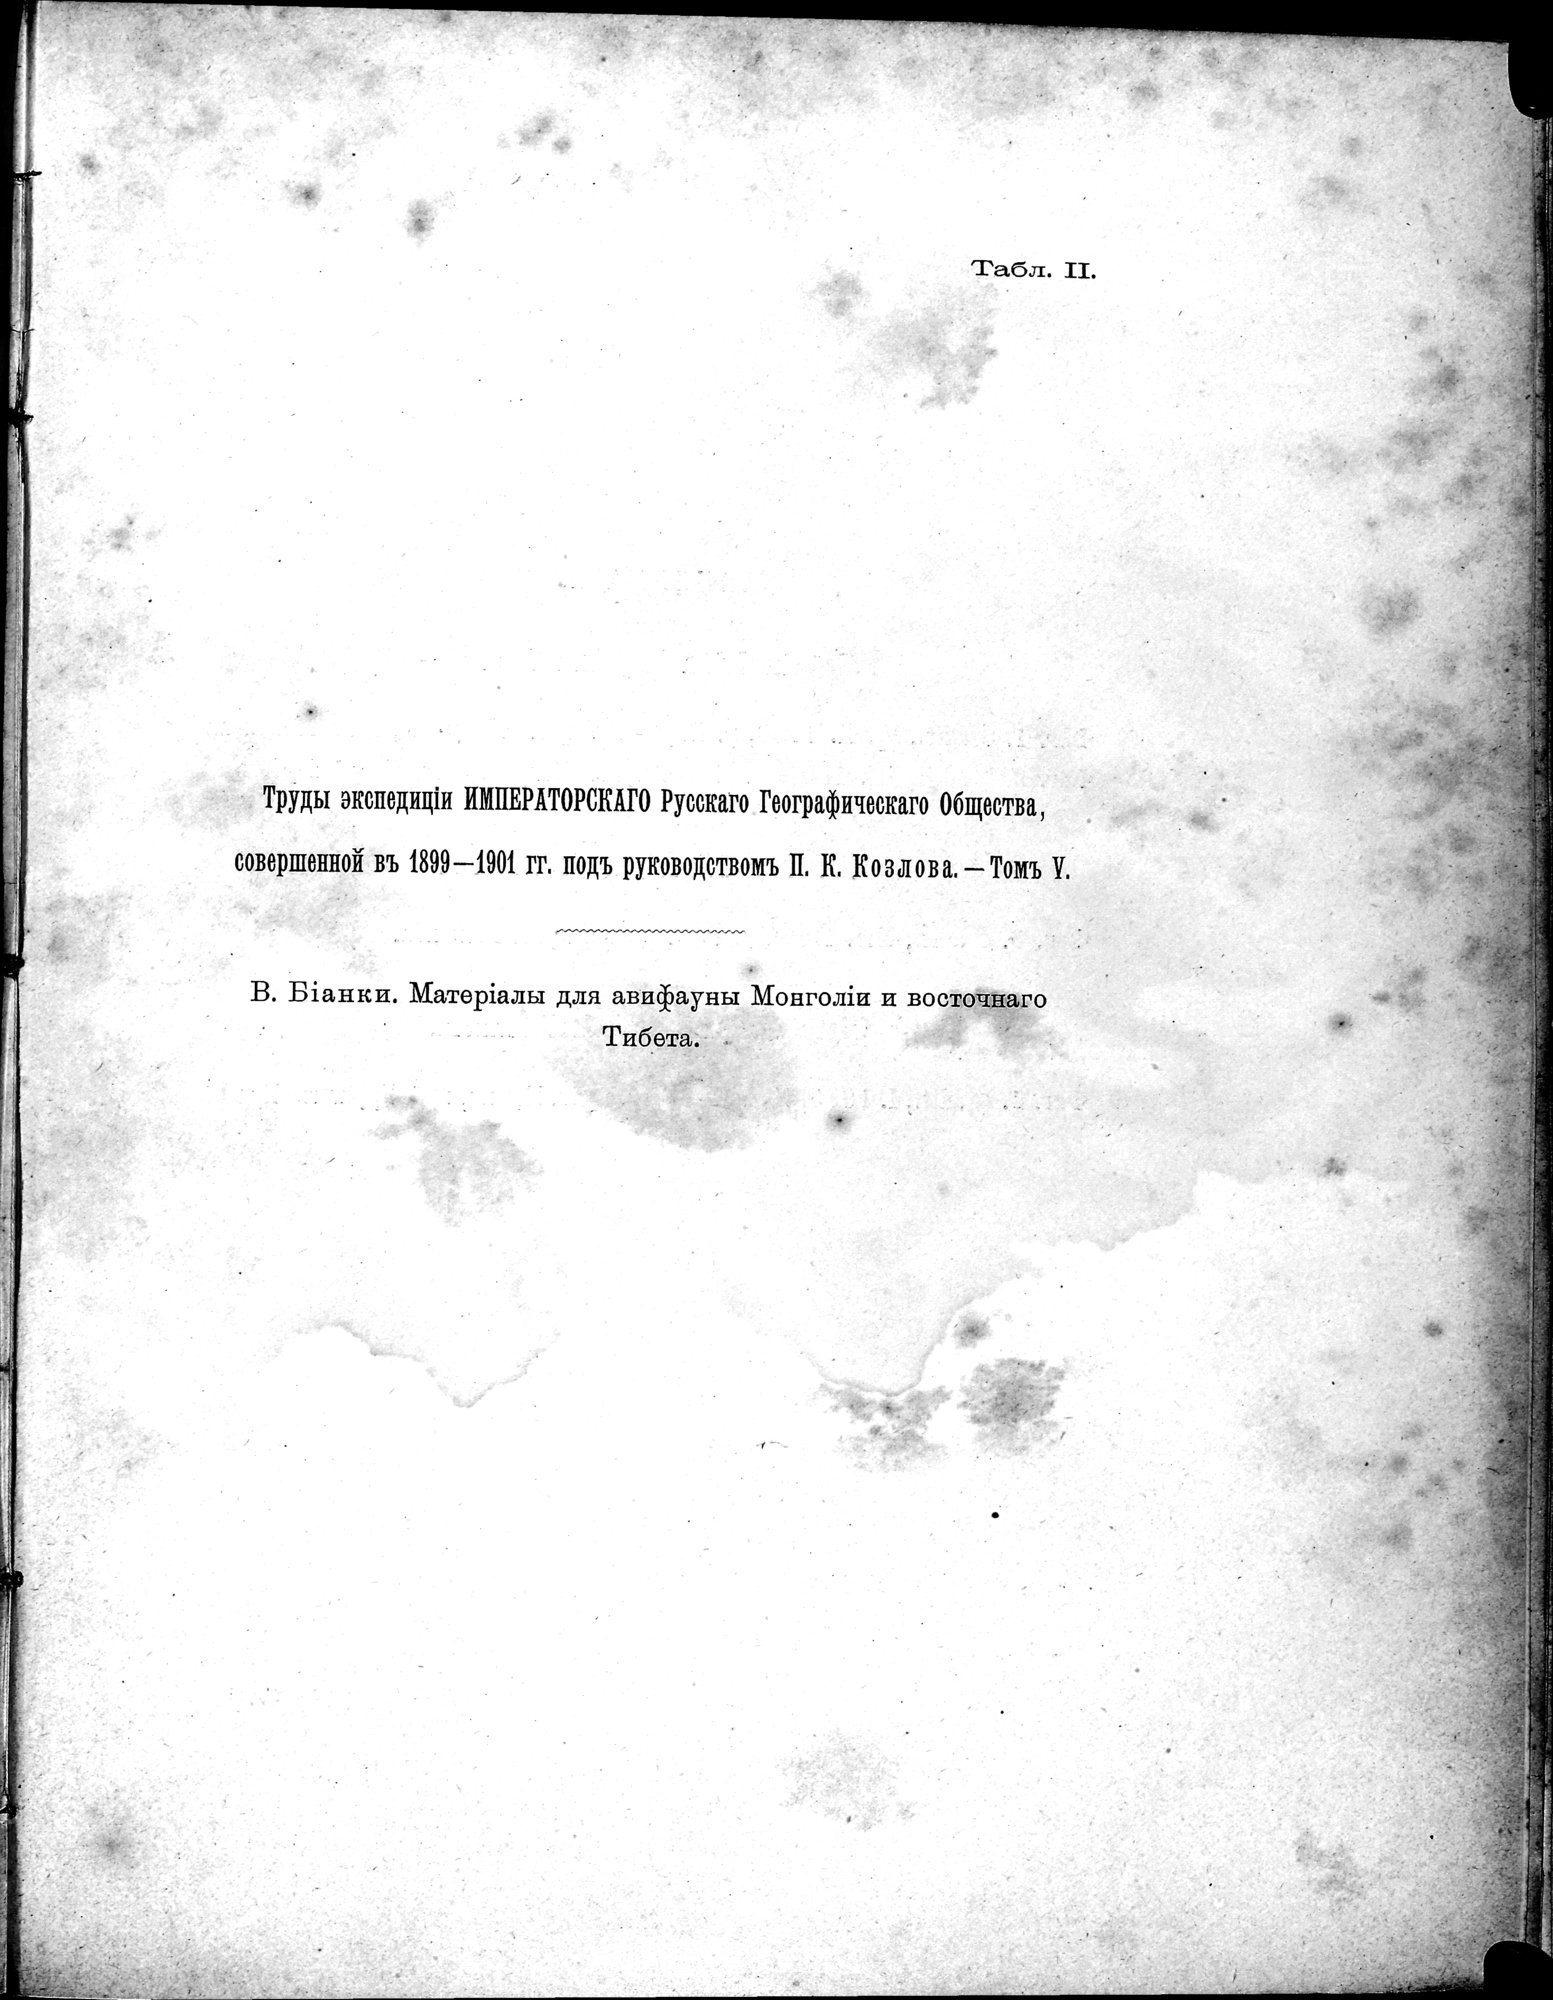 Mongoliia i Kam : vol.5 / Page 329 (Grayscale High Resolution Image)